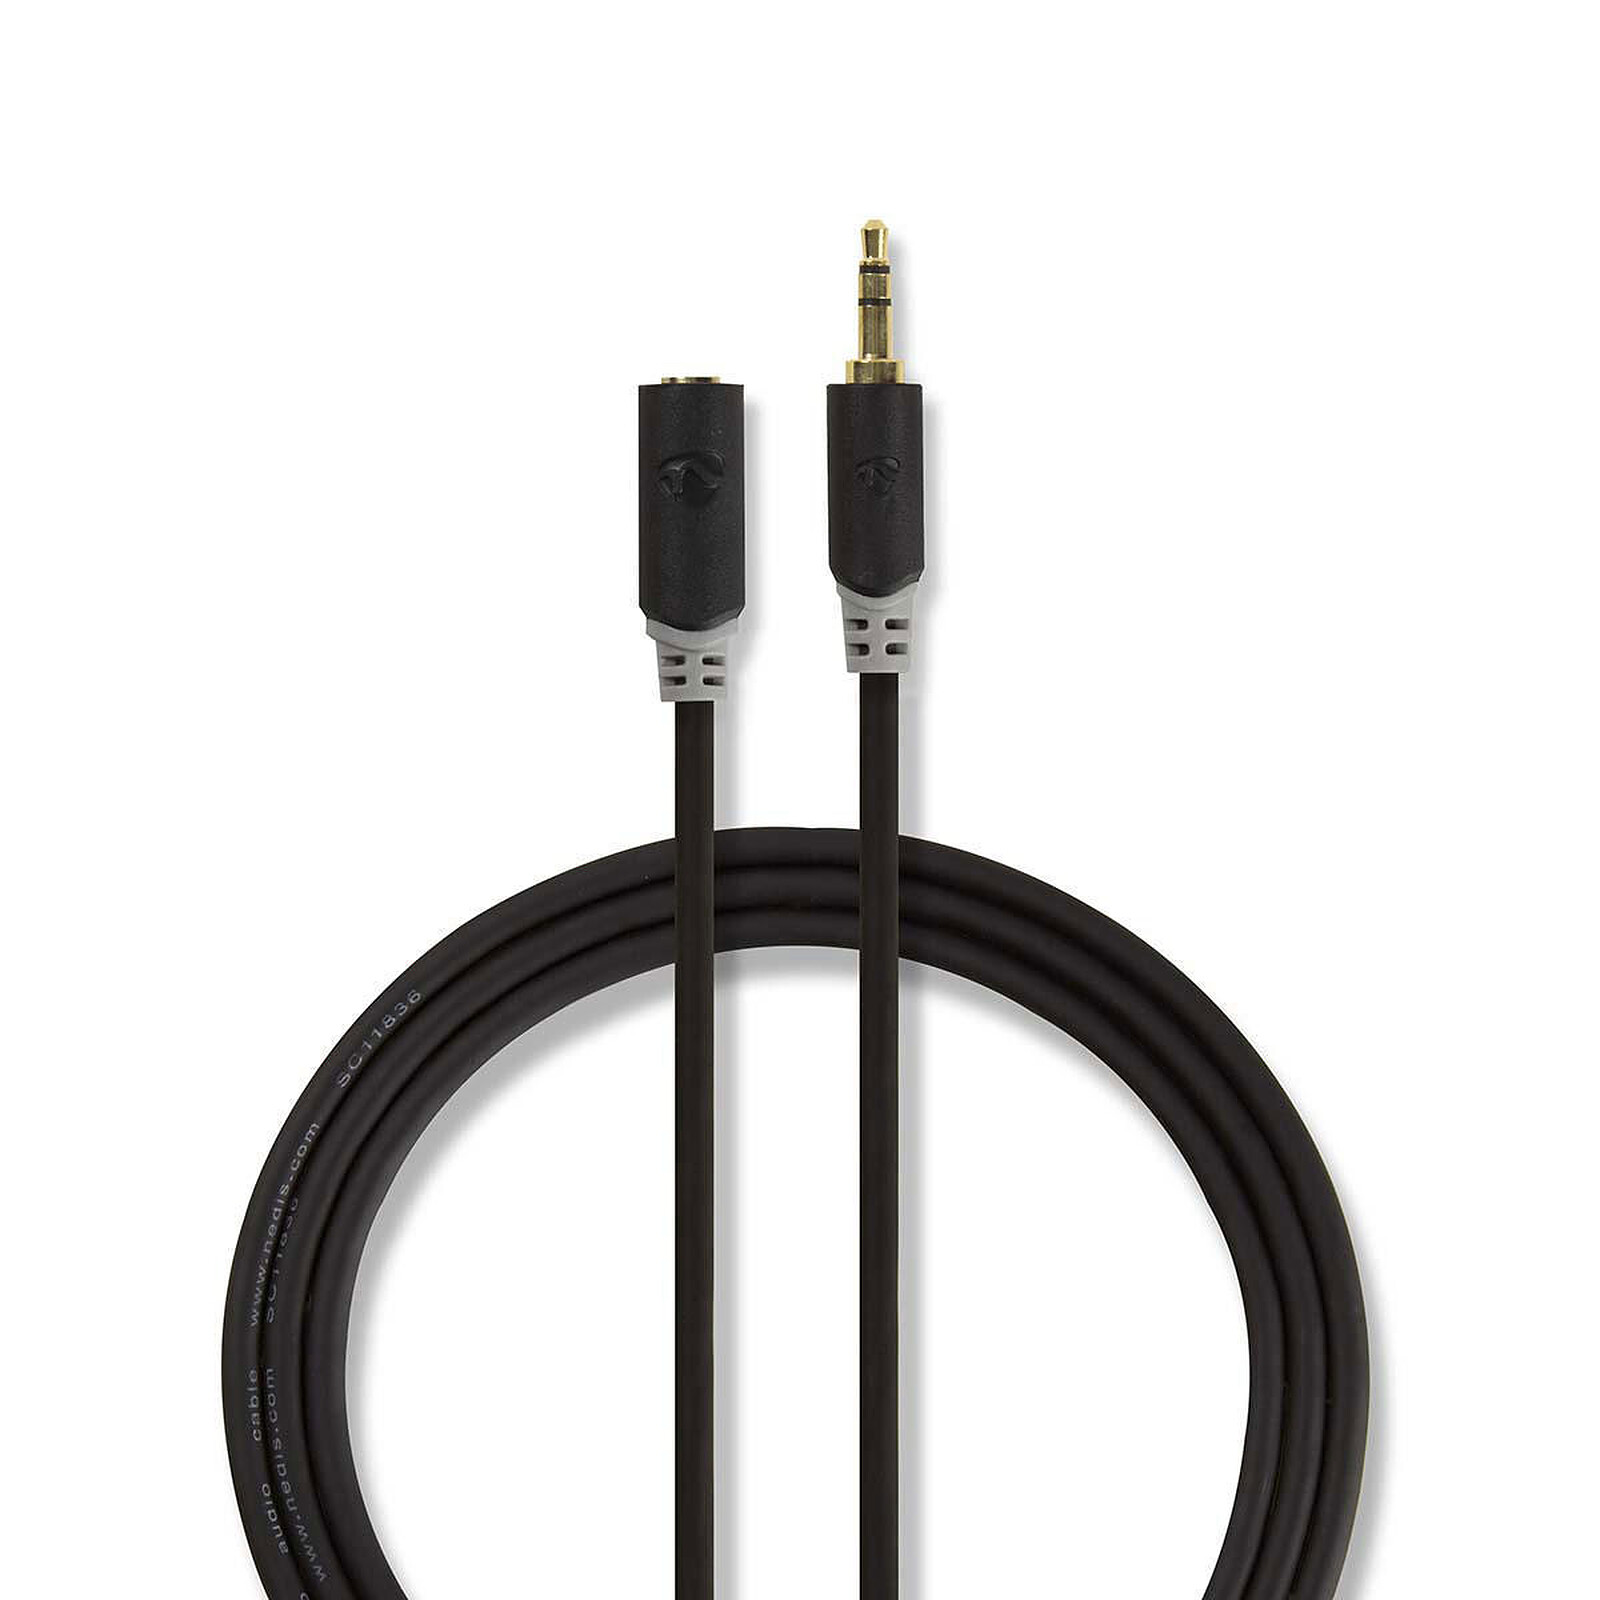 Rallonge audio Jack 3.5 mm stéréo mâle/femelle (2 mètres) - Câble audio Jack  - Garantie 3 ans LDLC